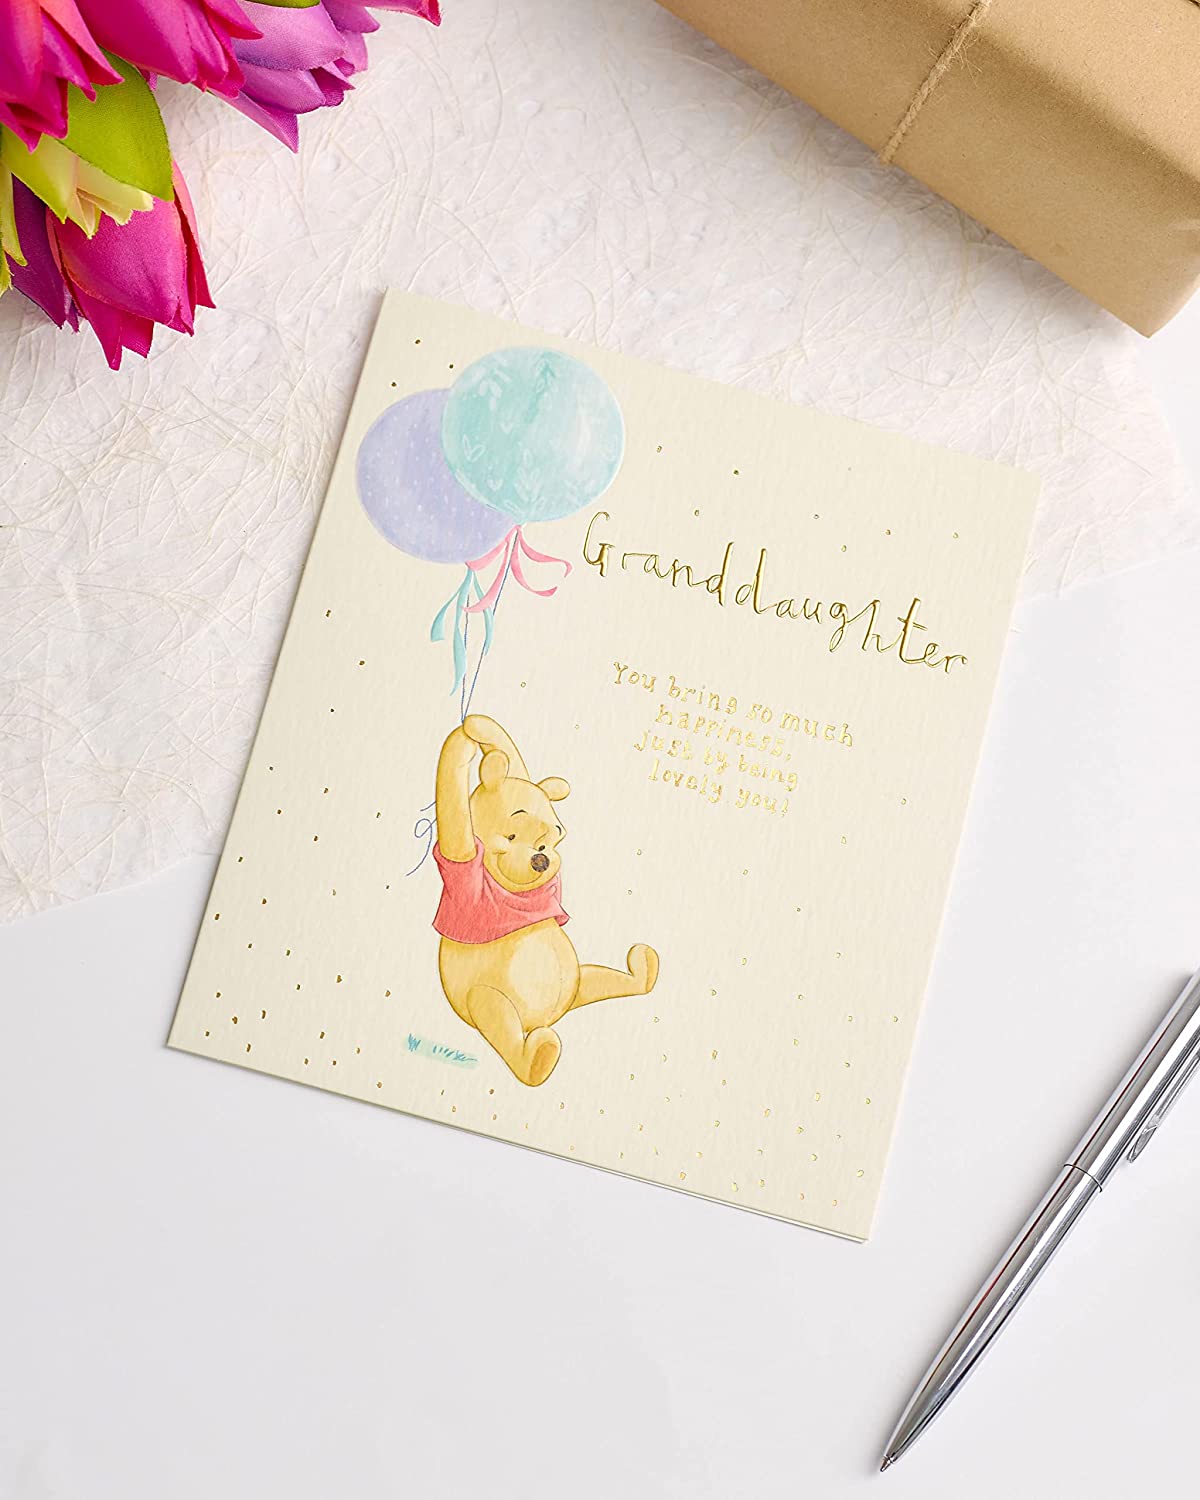 Granddaughter Birthday Card - Winnie the Pooh In Flight